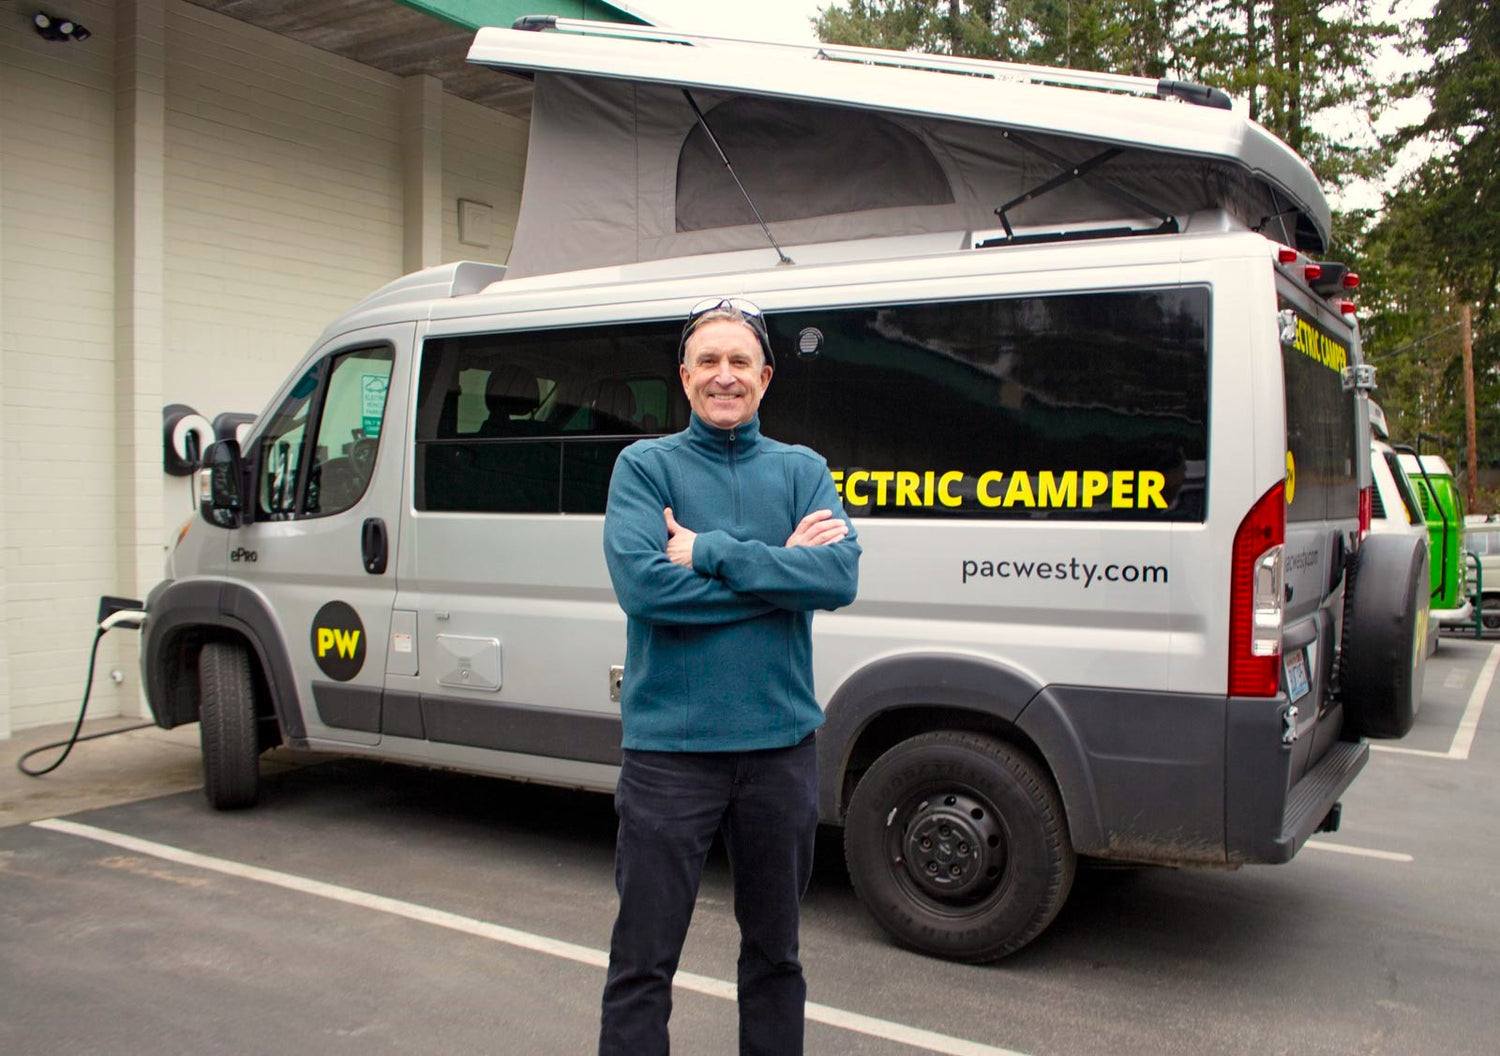 Greg shows off one of Pac Westy's EV camper vans